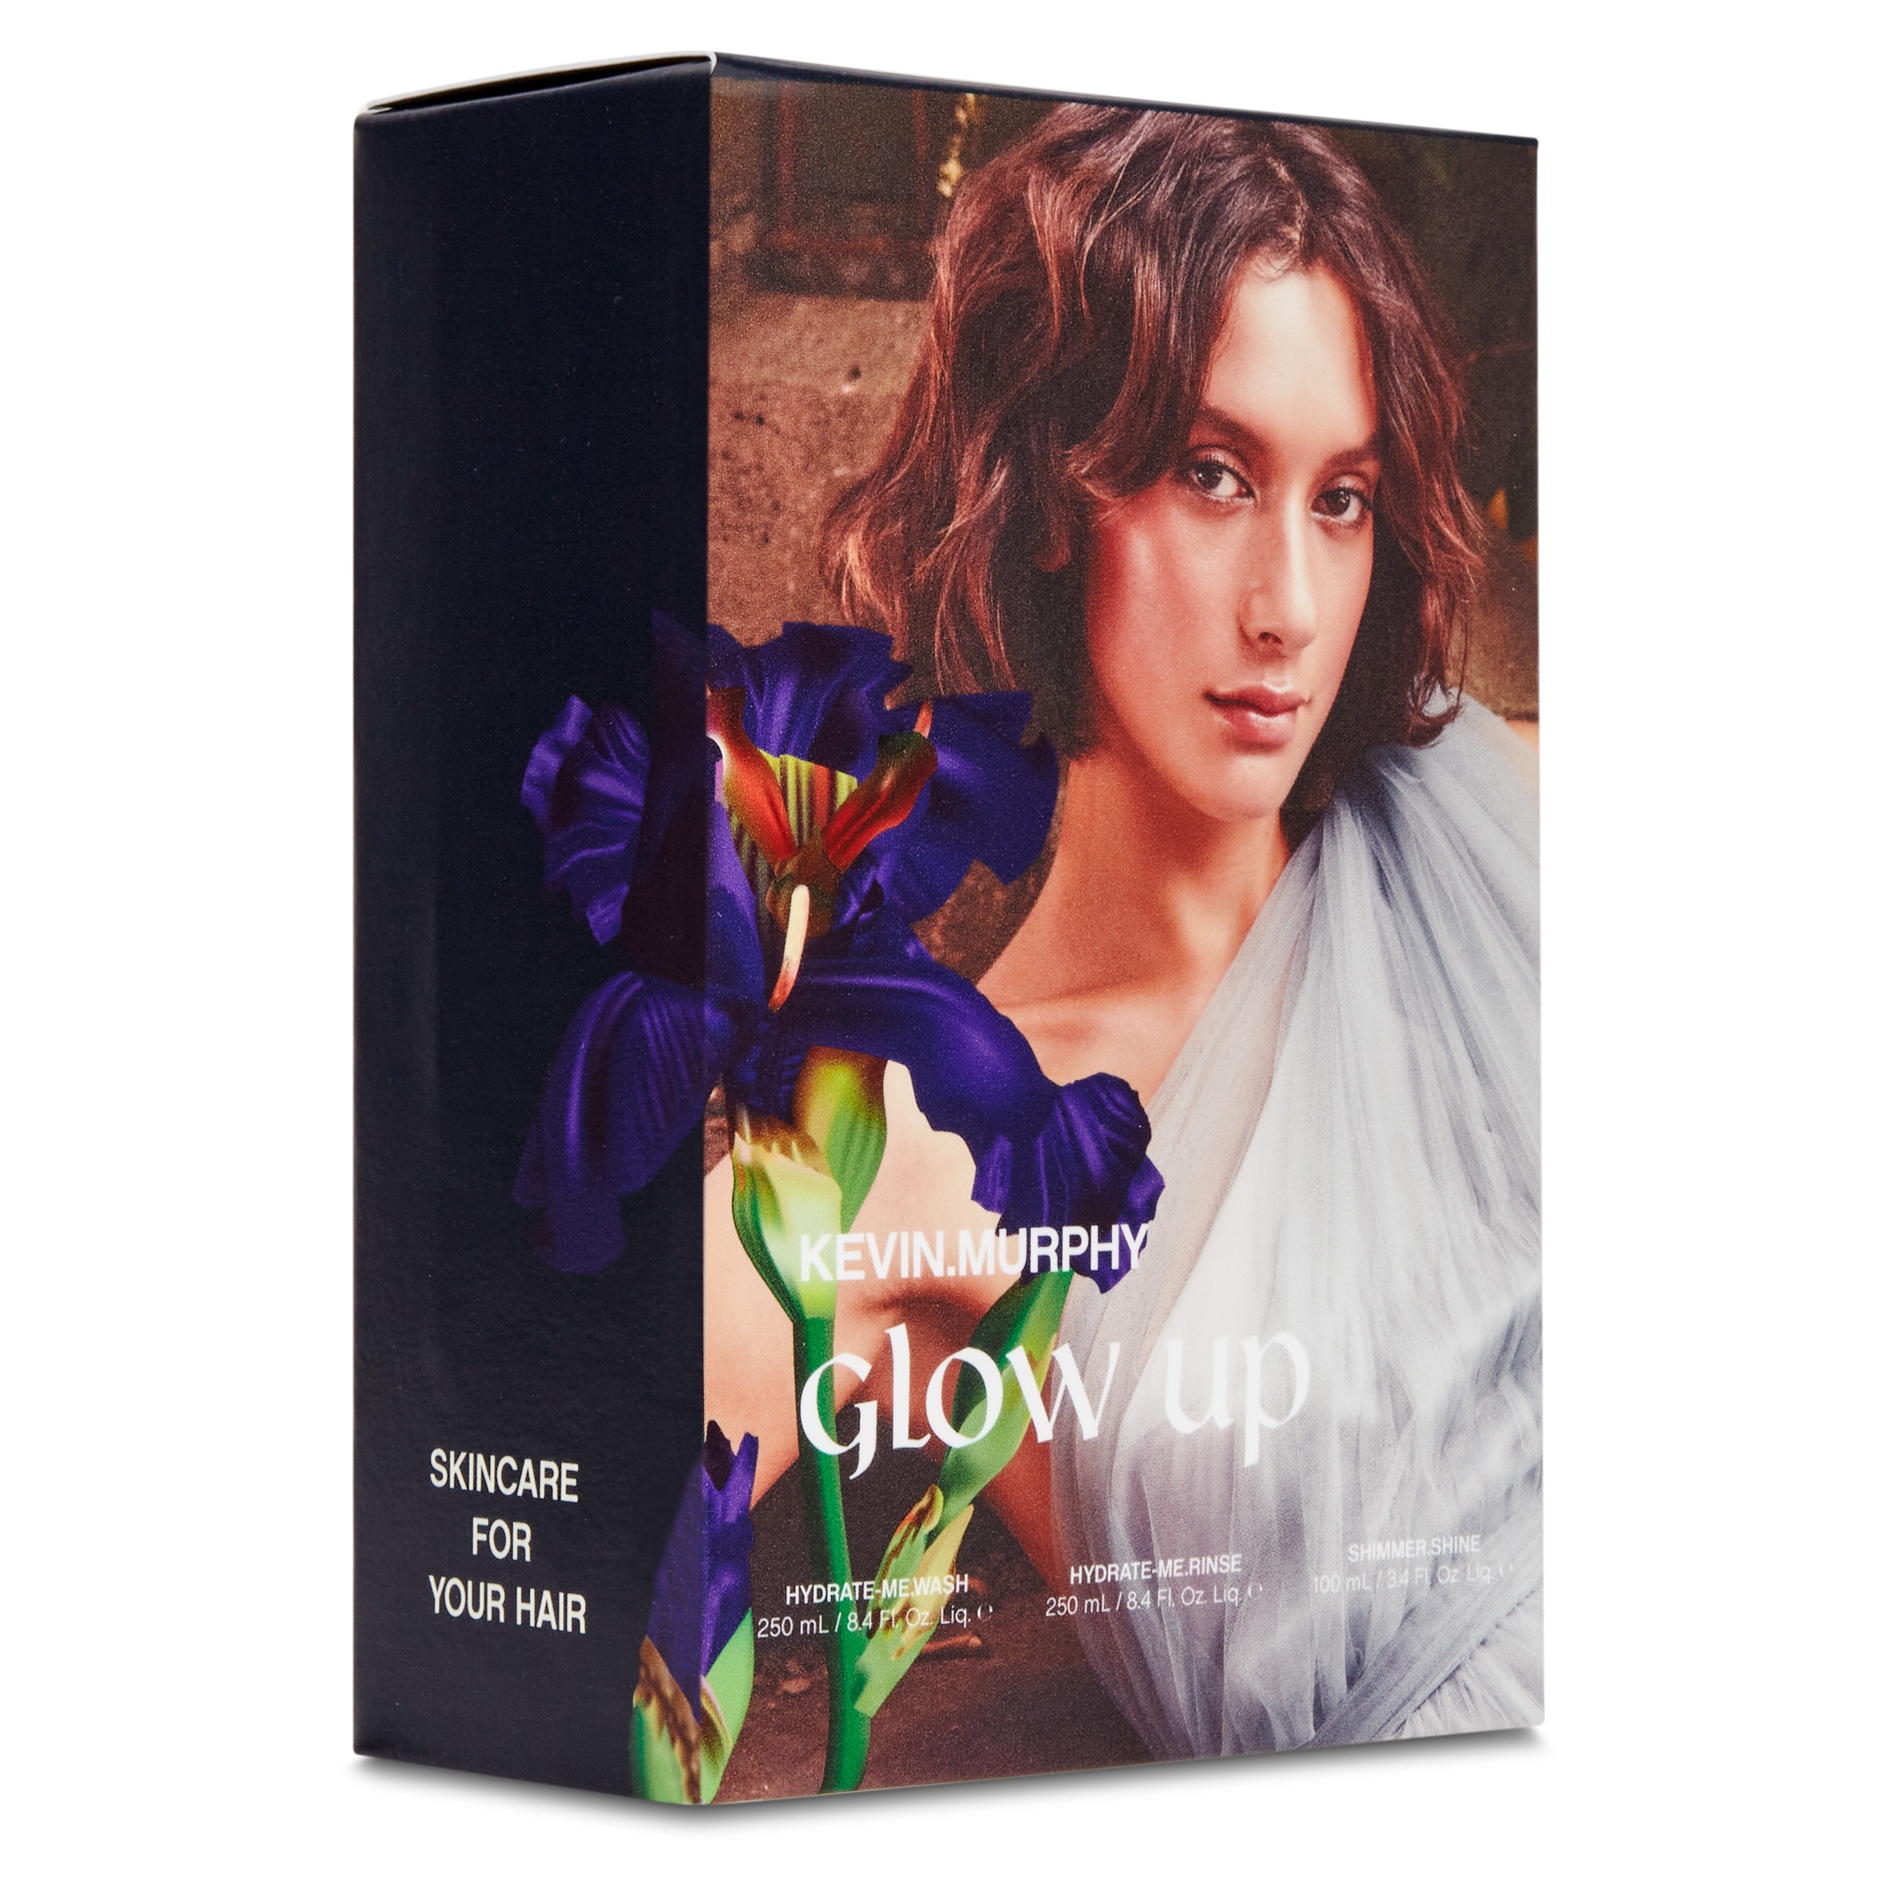 KEVIN.MURPHY Prepack: Glow Up 3pk Box Set